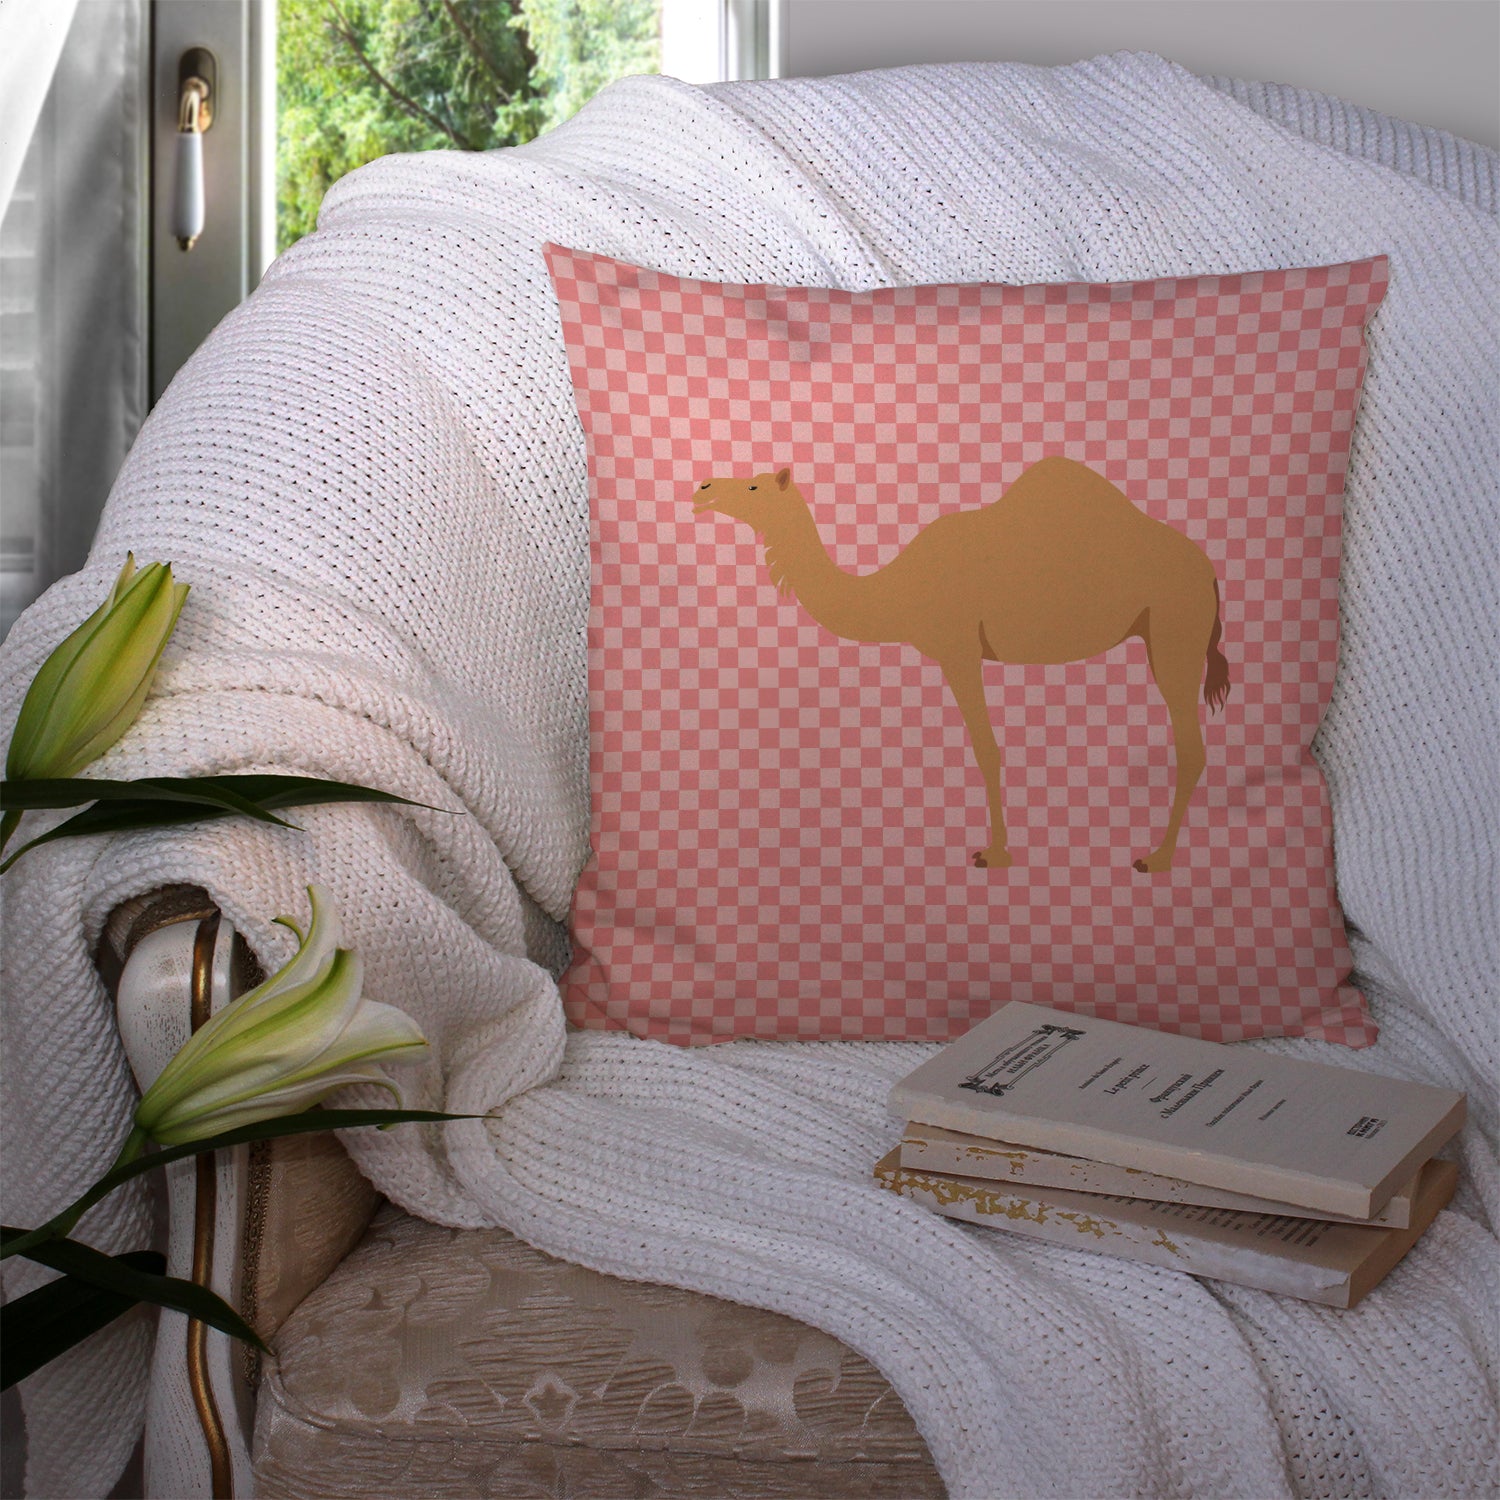 Arabian Camel Dromedary Pink Check Fabric Decorative Pillow BB7817PW1414 - the-store.com